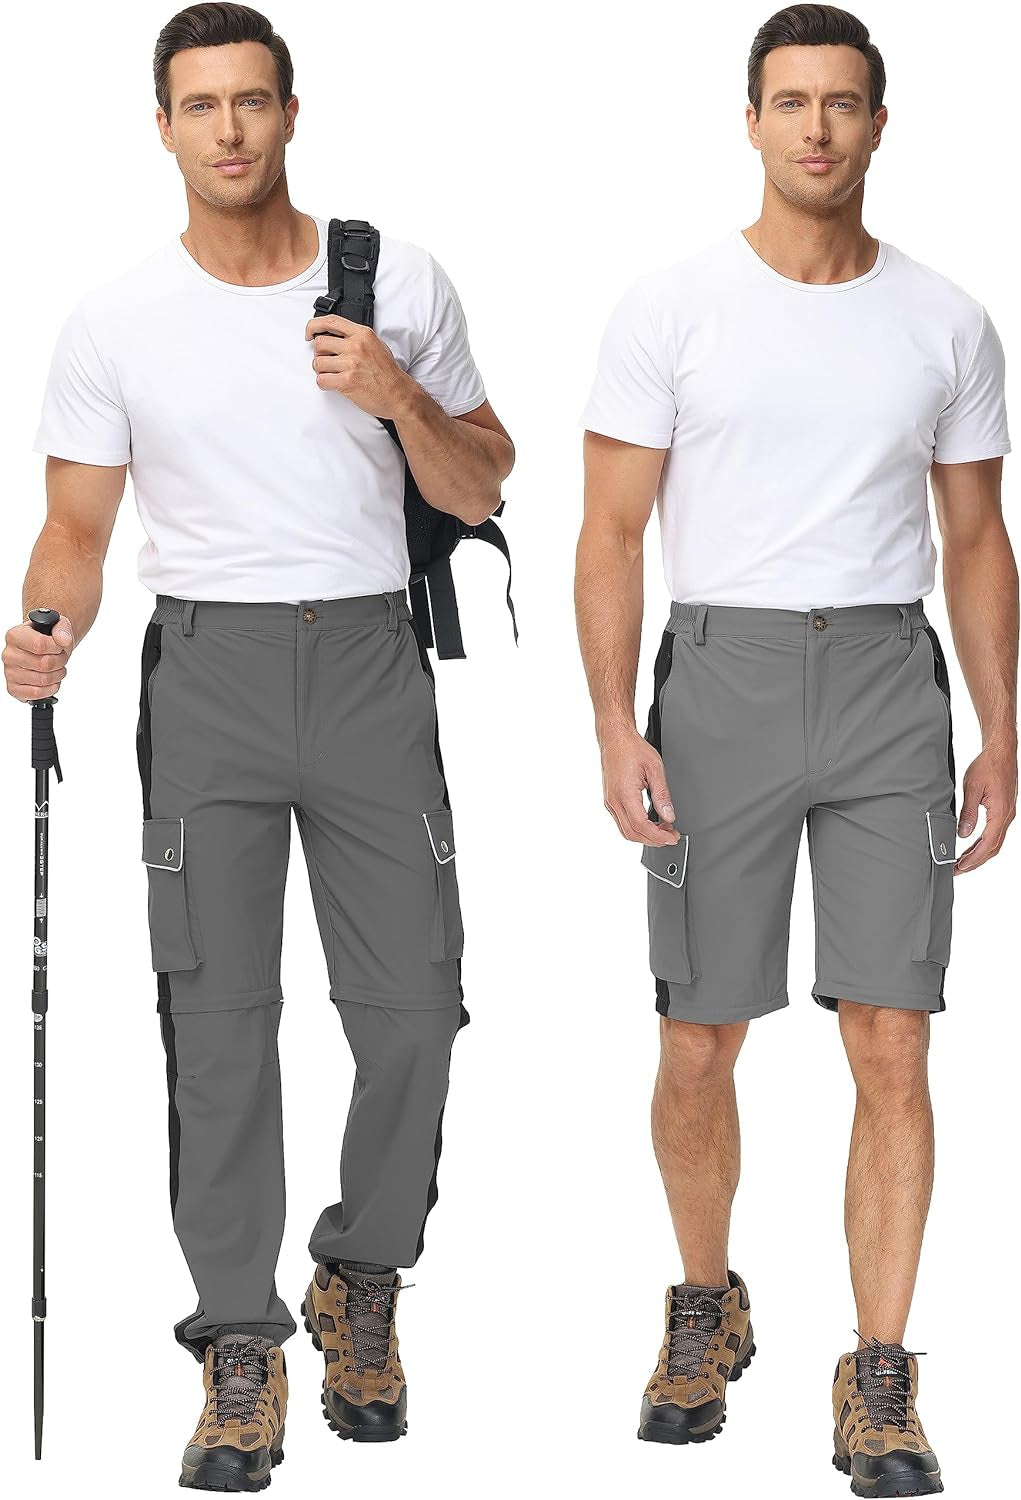 Mens Convertible Hiking Pants Zip off Detachable Lightweight Quick Dry Outdoor Pants